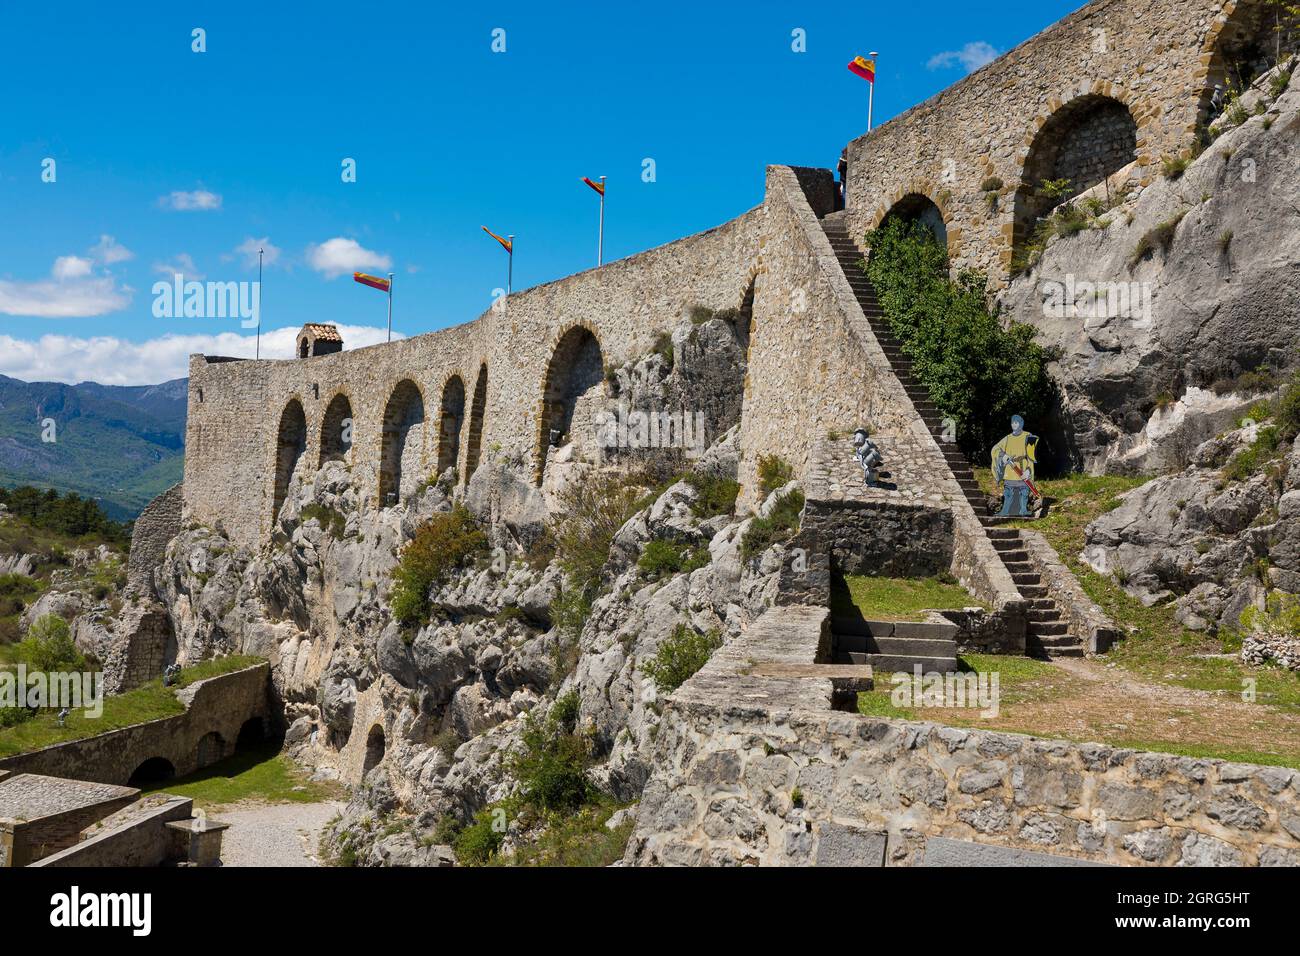 France, Alpes de Haute Provence, Sisteron, citadel, walkway Stock Photo